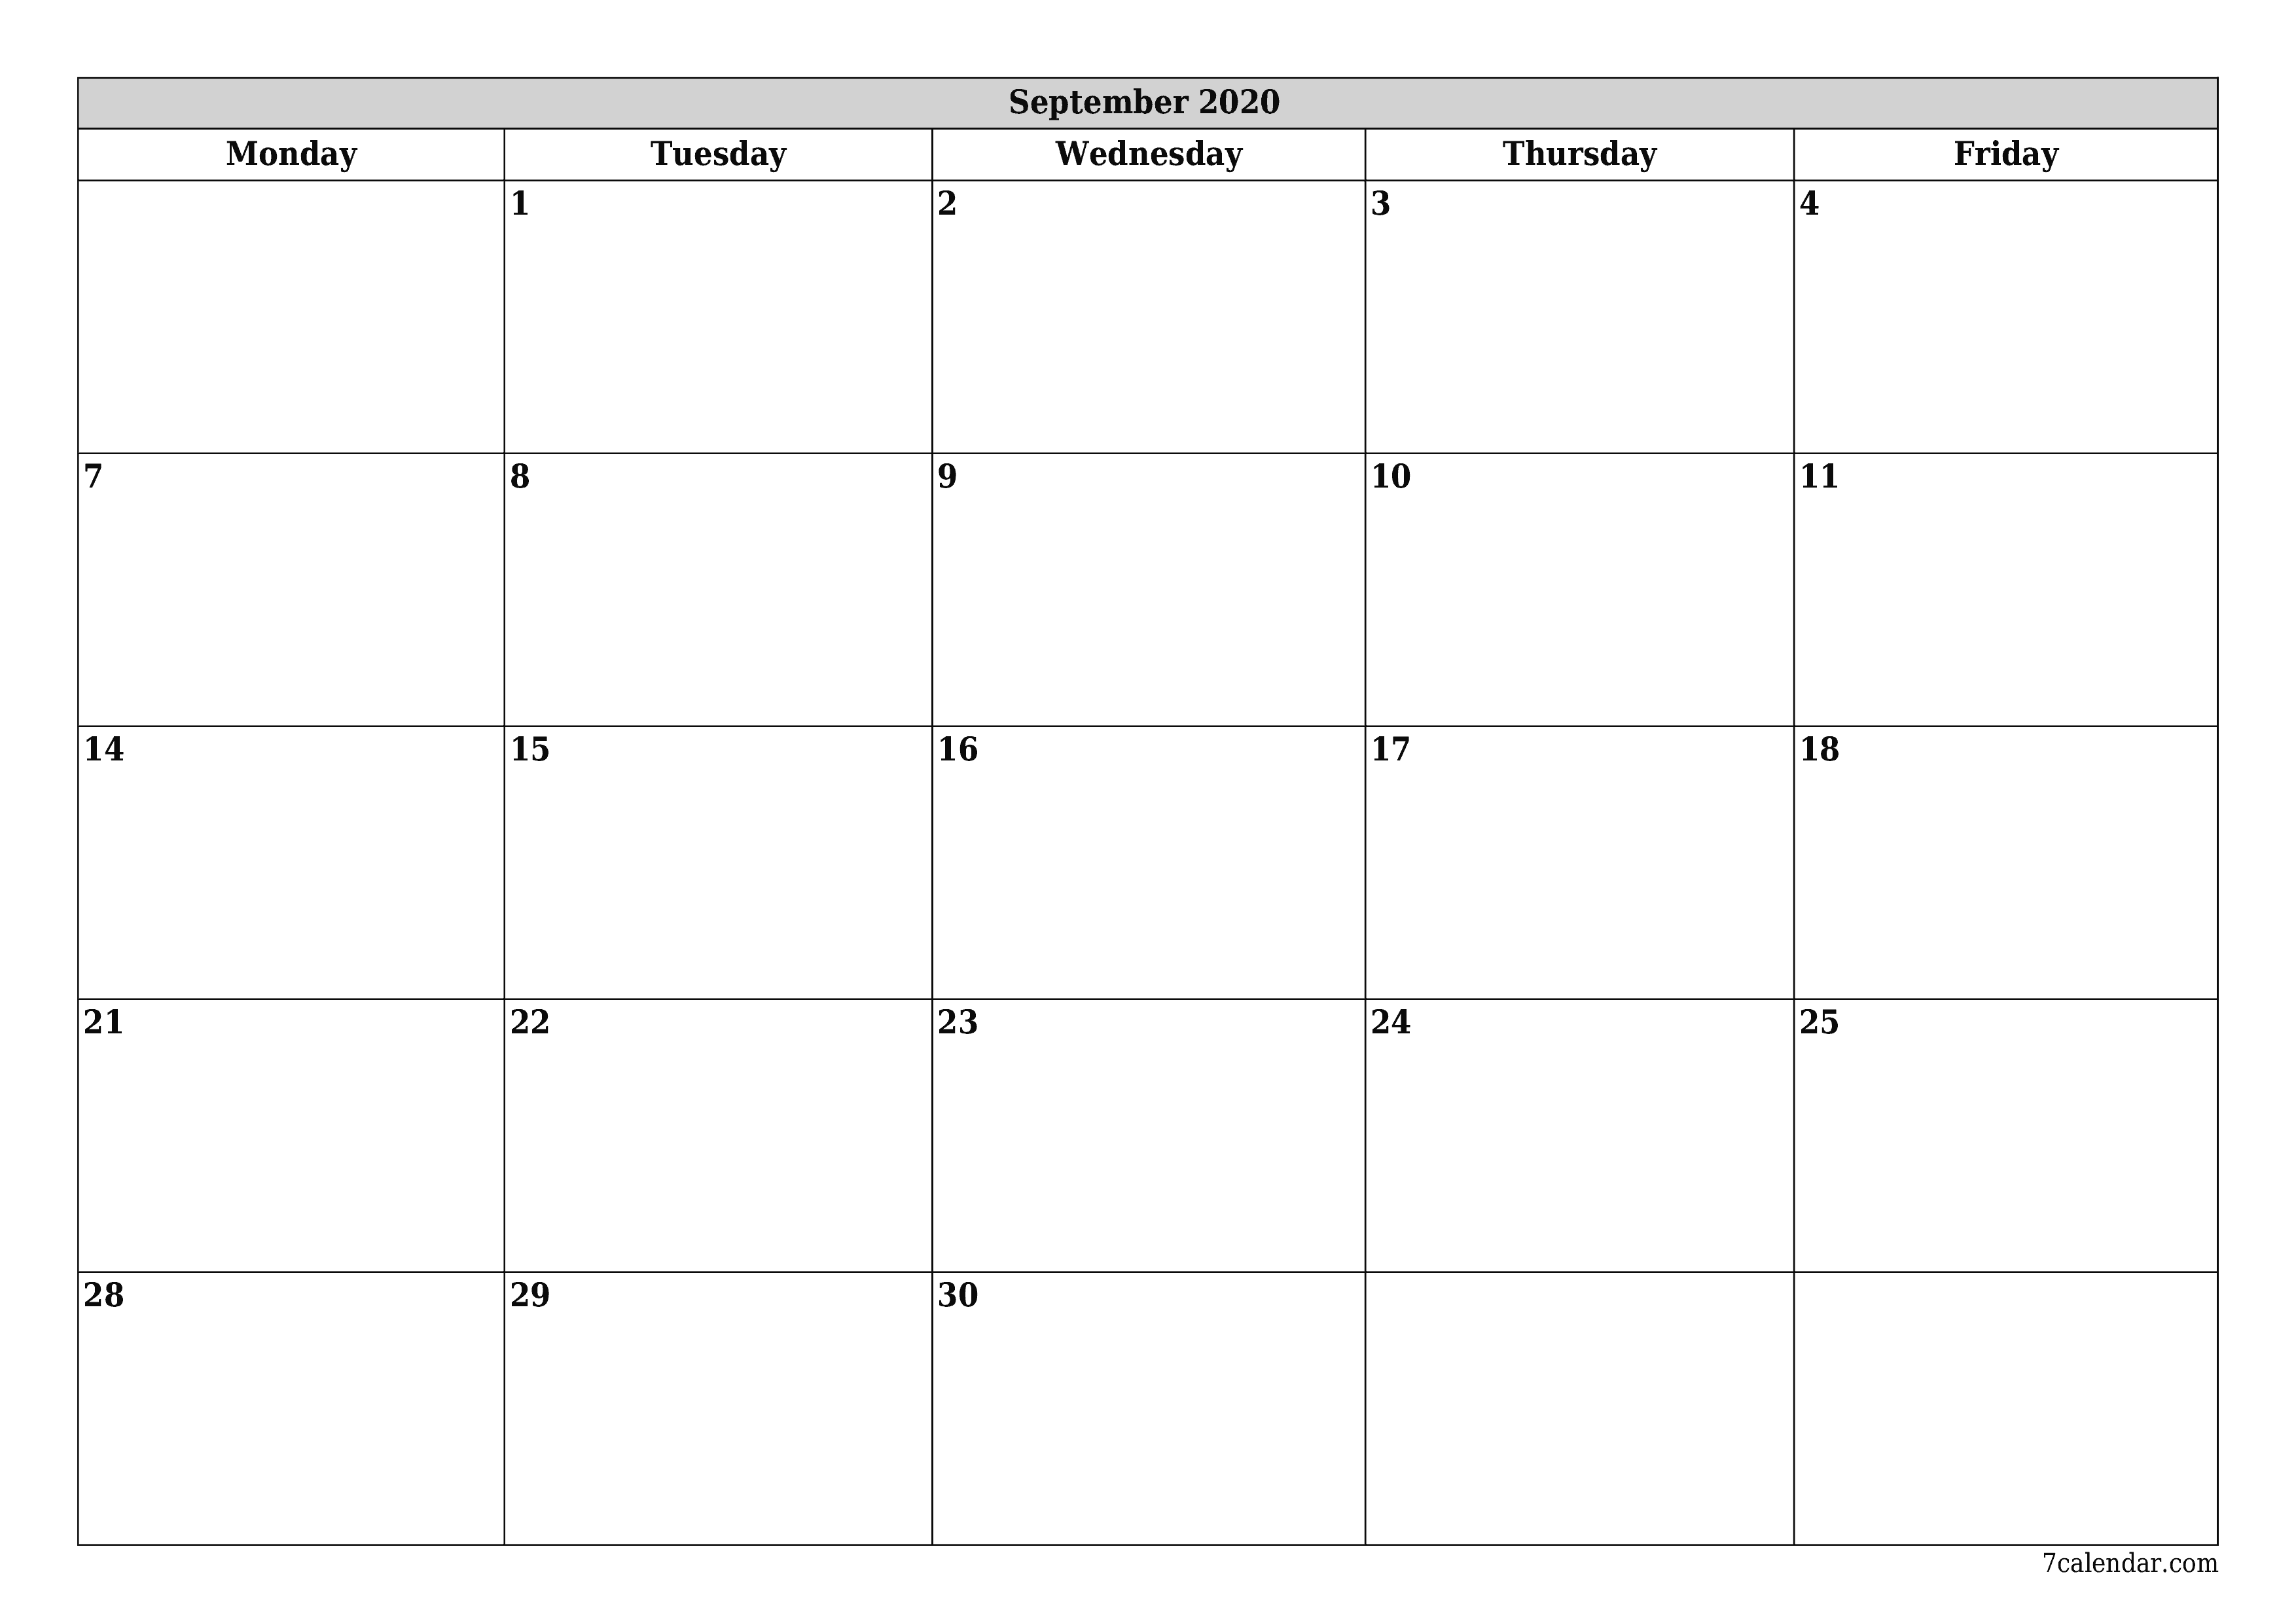 printable wall template free horizontal Monthly planner calendar September (Sep) 2020